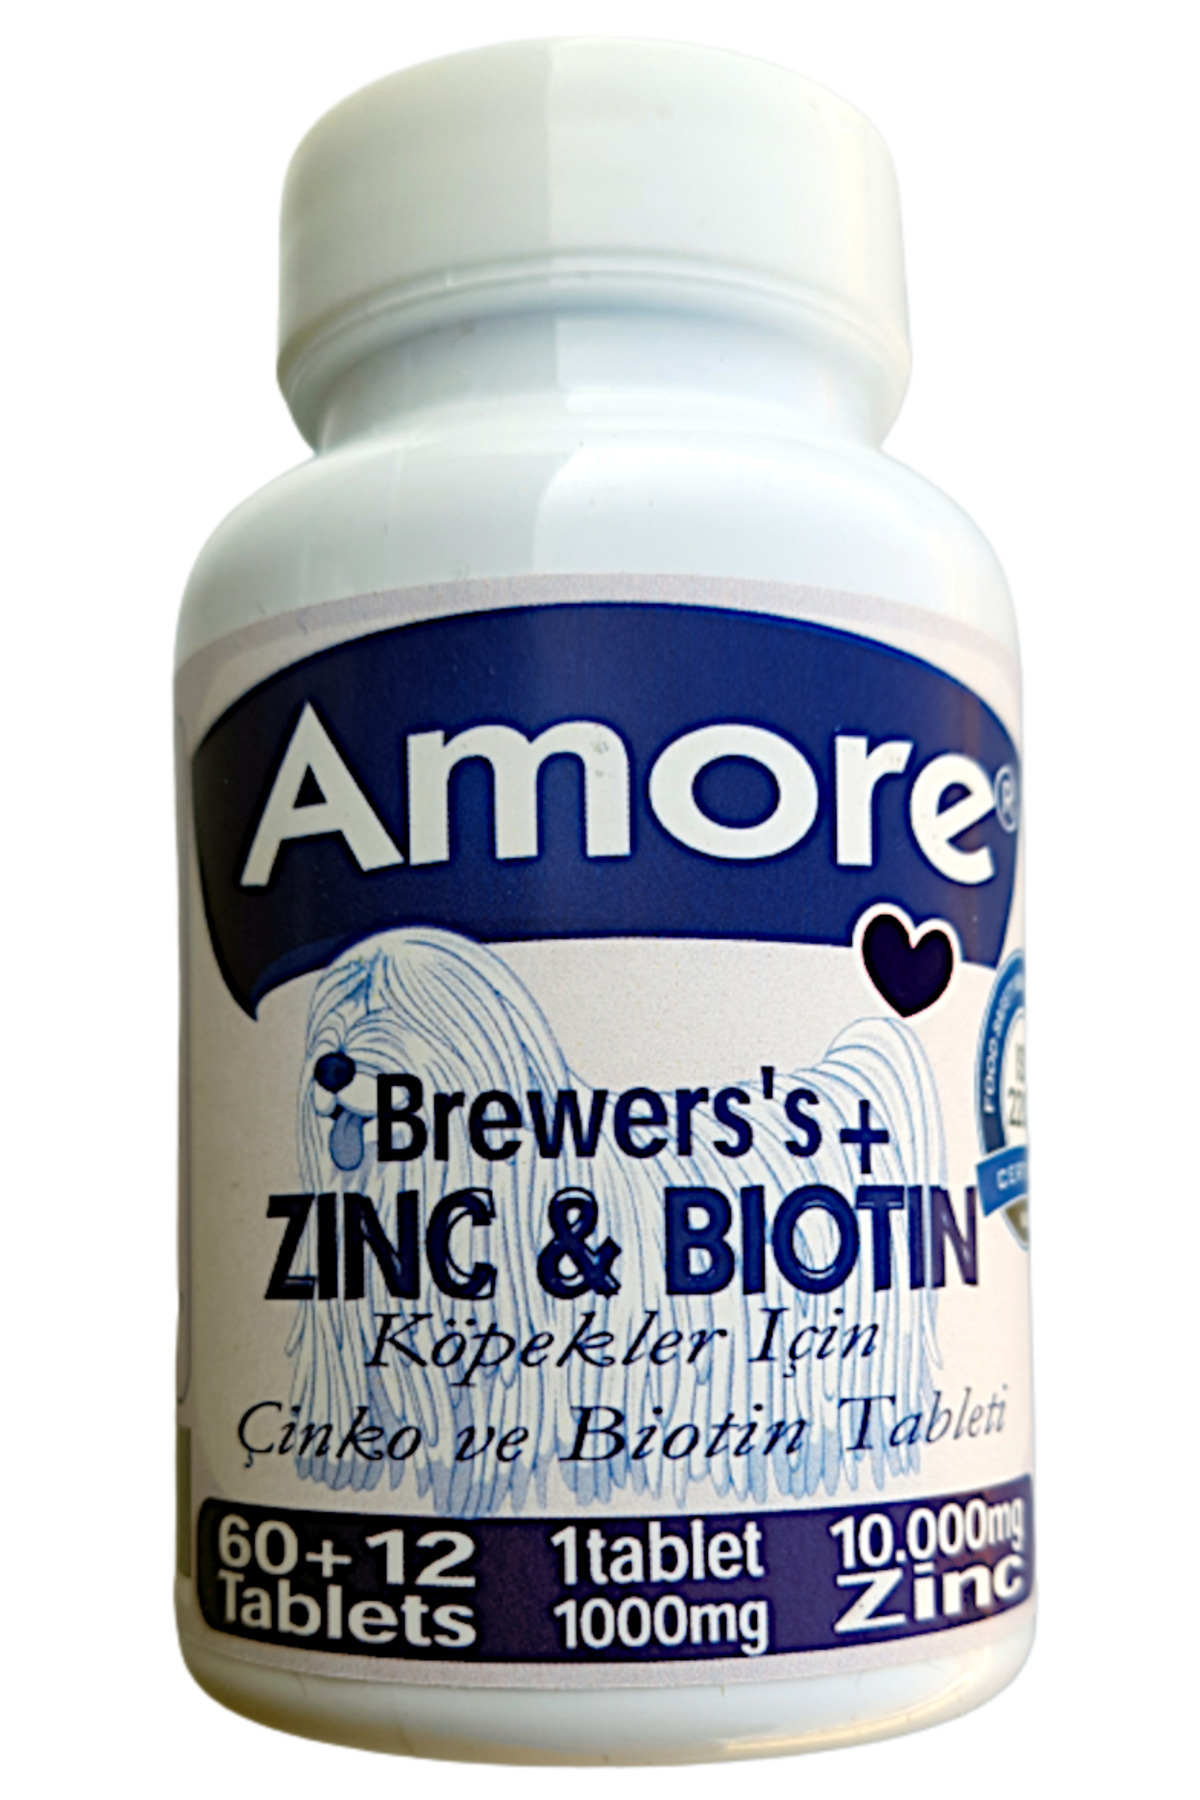 Amore Kopek Brewers 3 x 72li Cinko Biotin Tablet Tuy Dokum XL Zinc Biotin Large Tabs